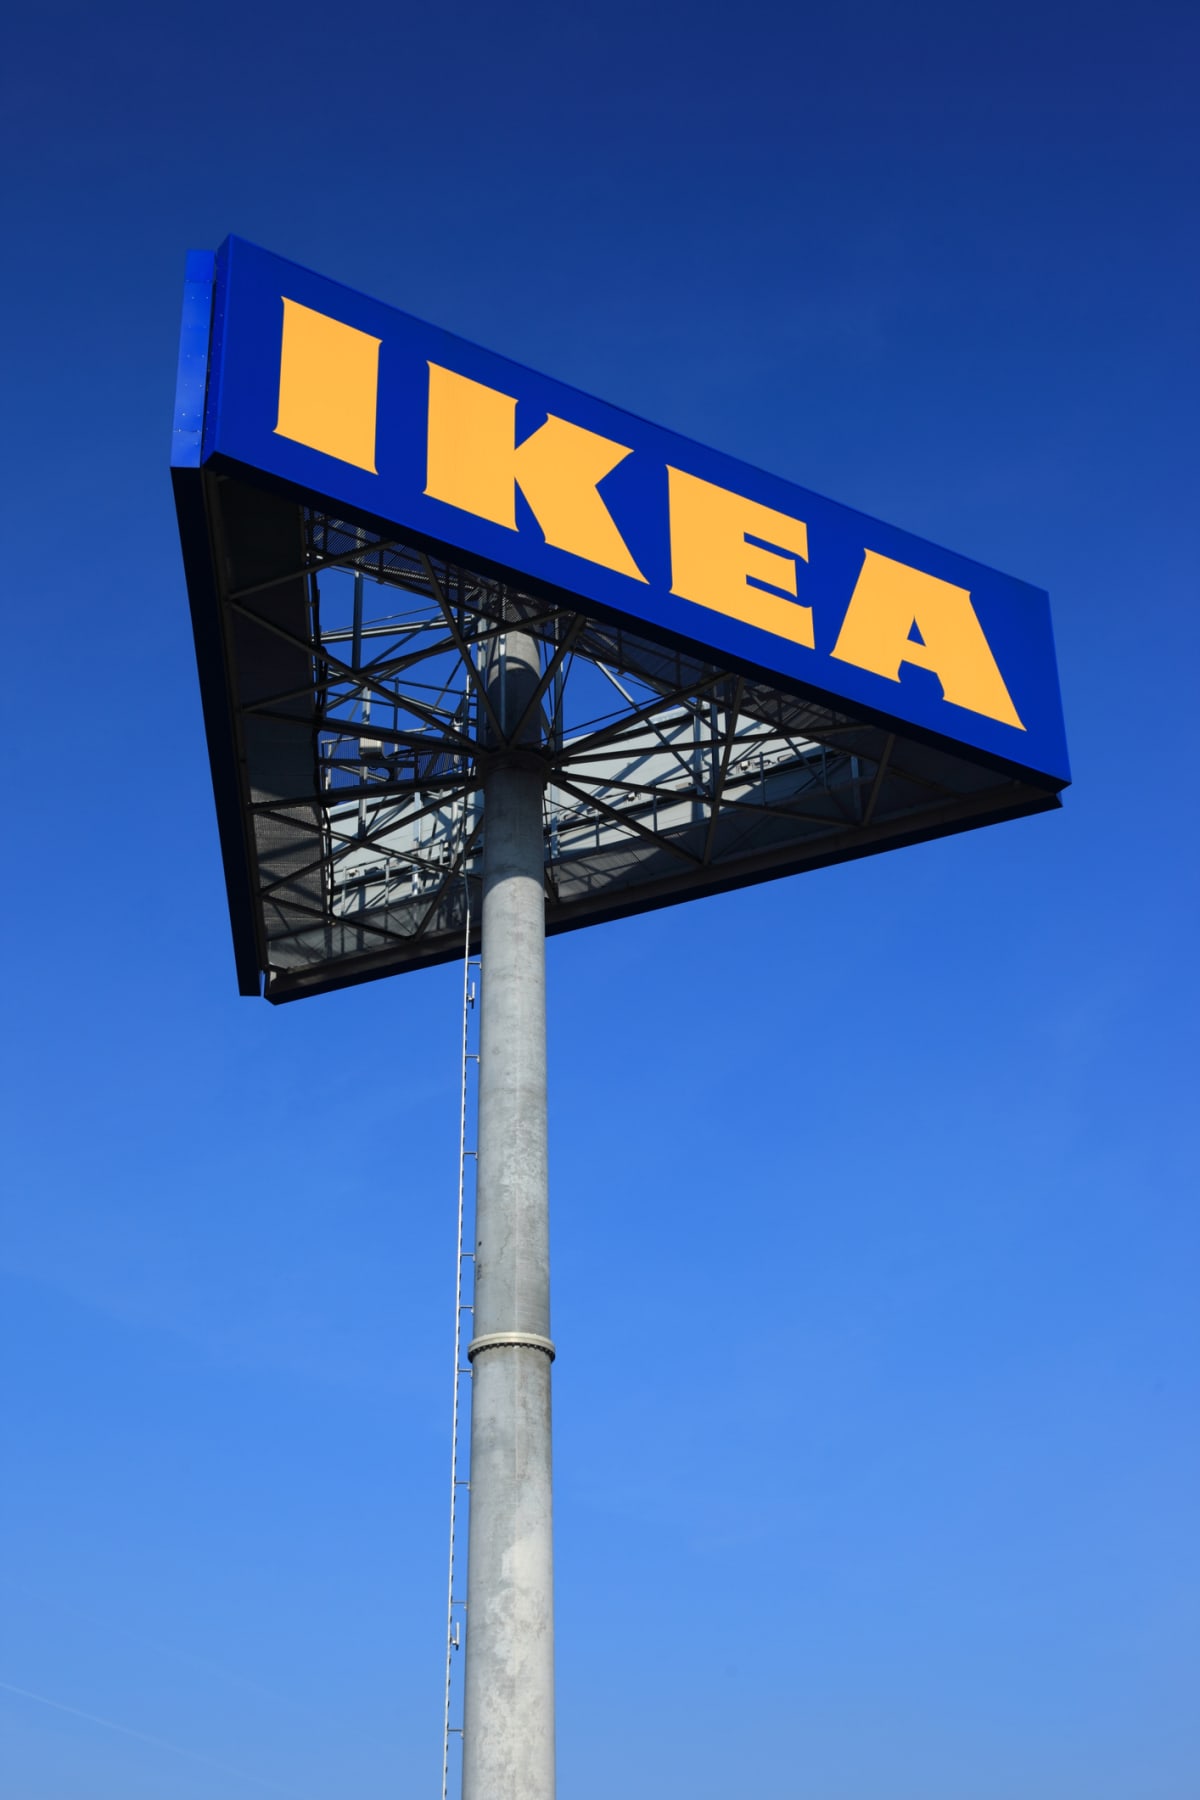 The IKEA logo on a signboard.